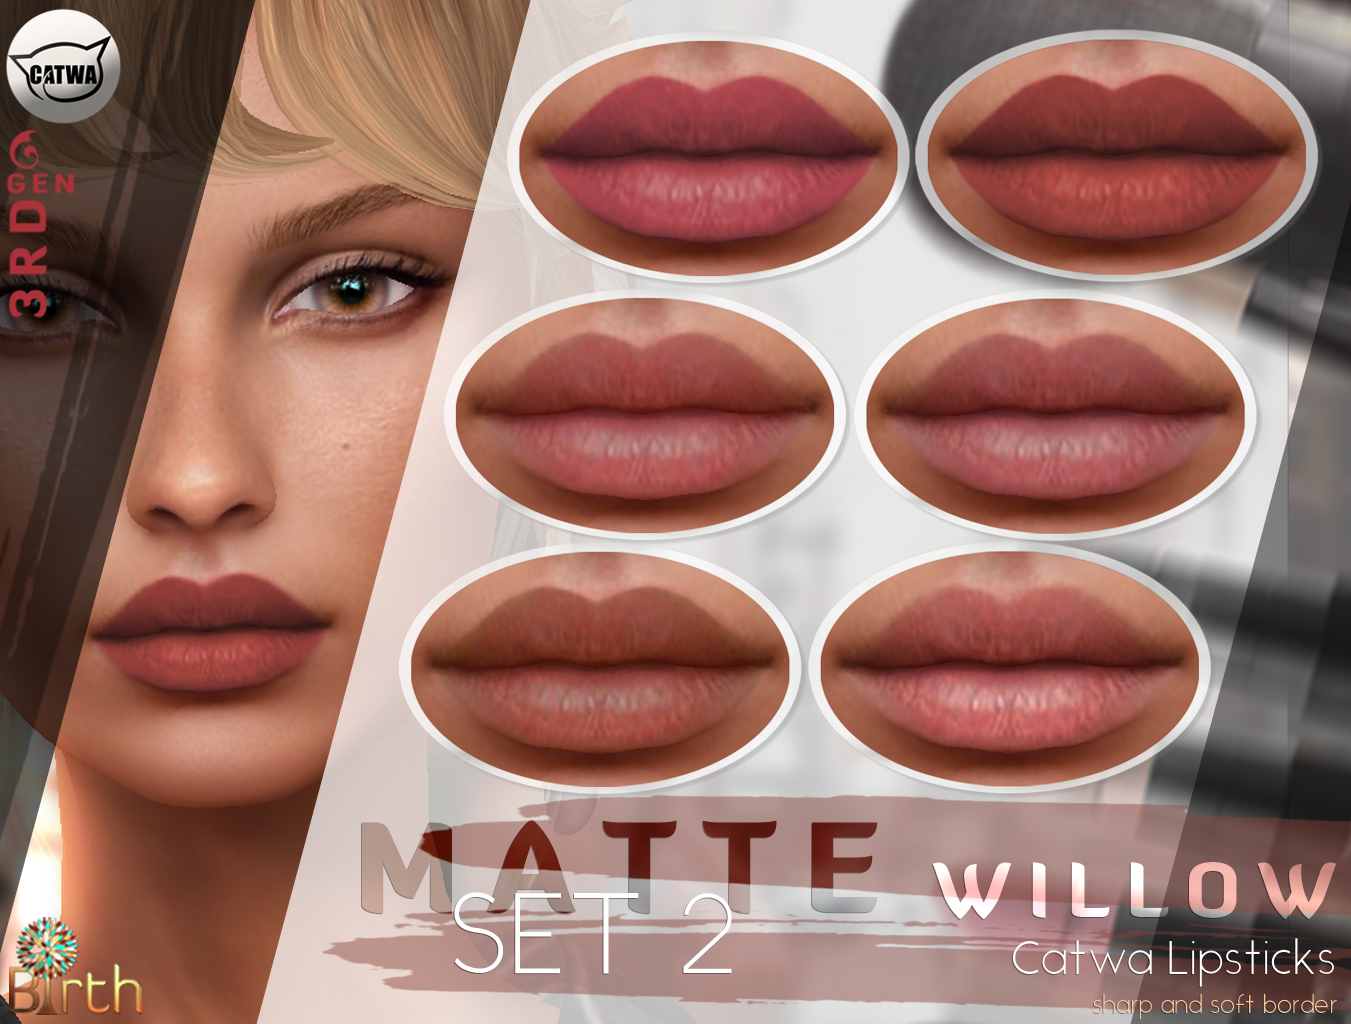 birth-catwa-lipsticks-willow-matte-set-2